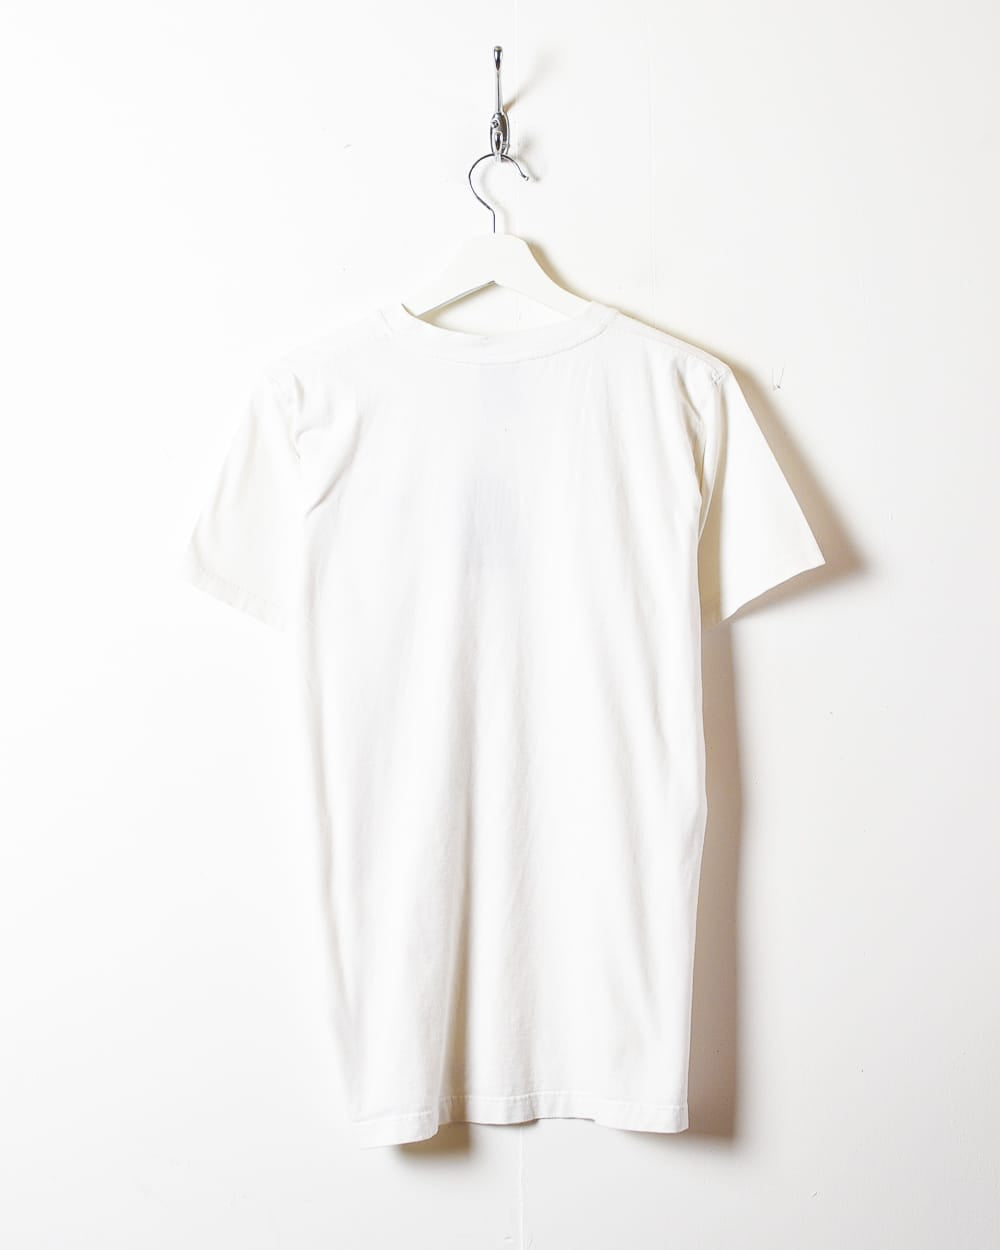 White Nike T-Shirt - Small